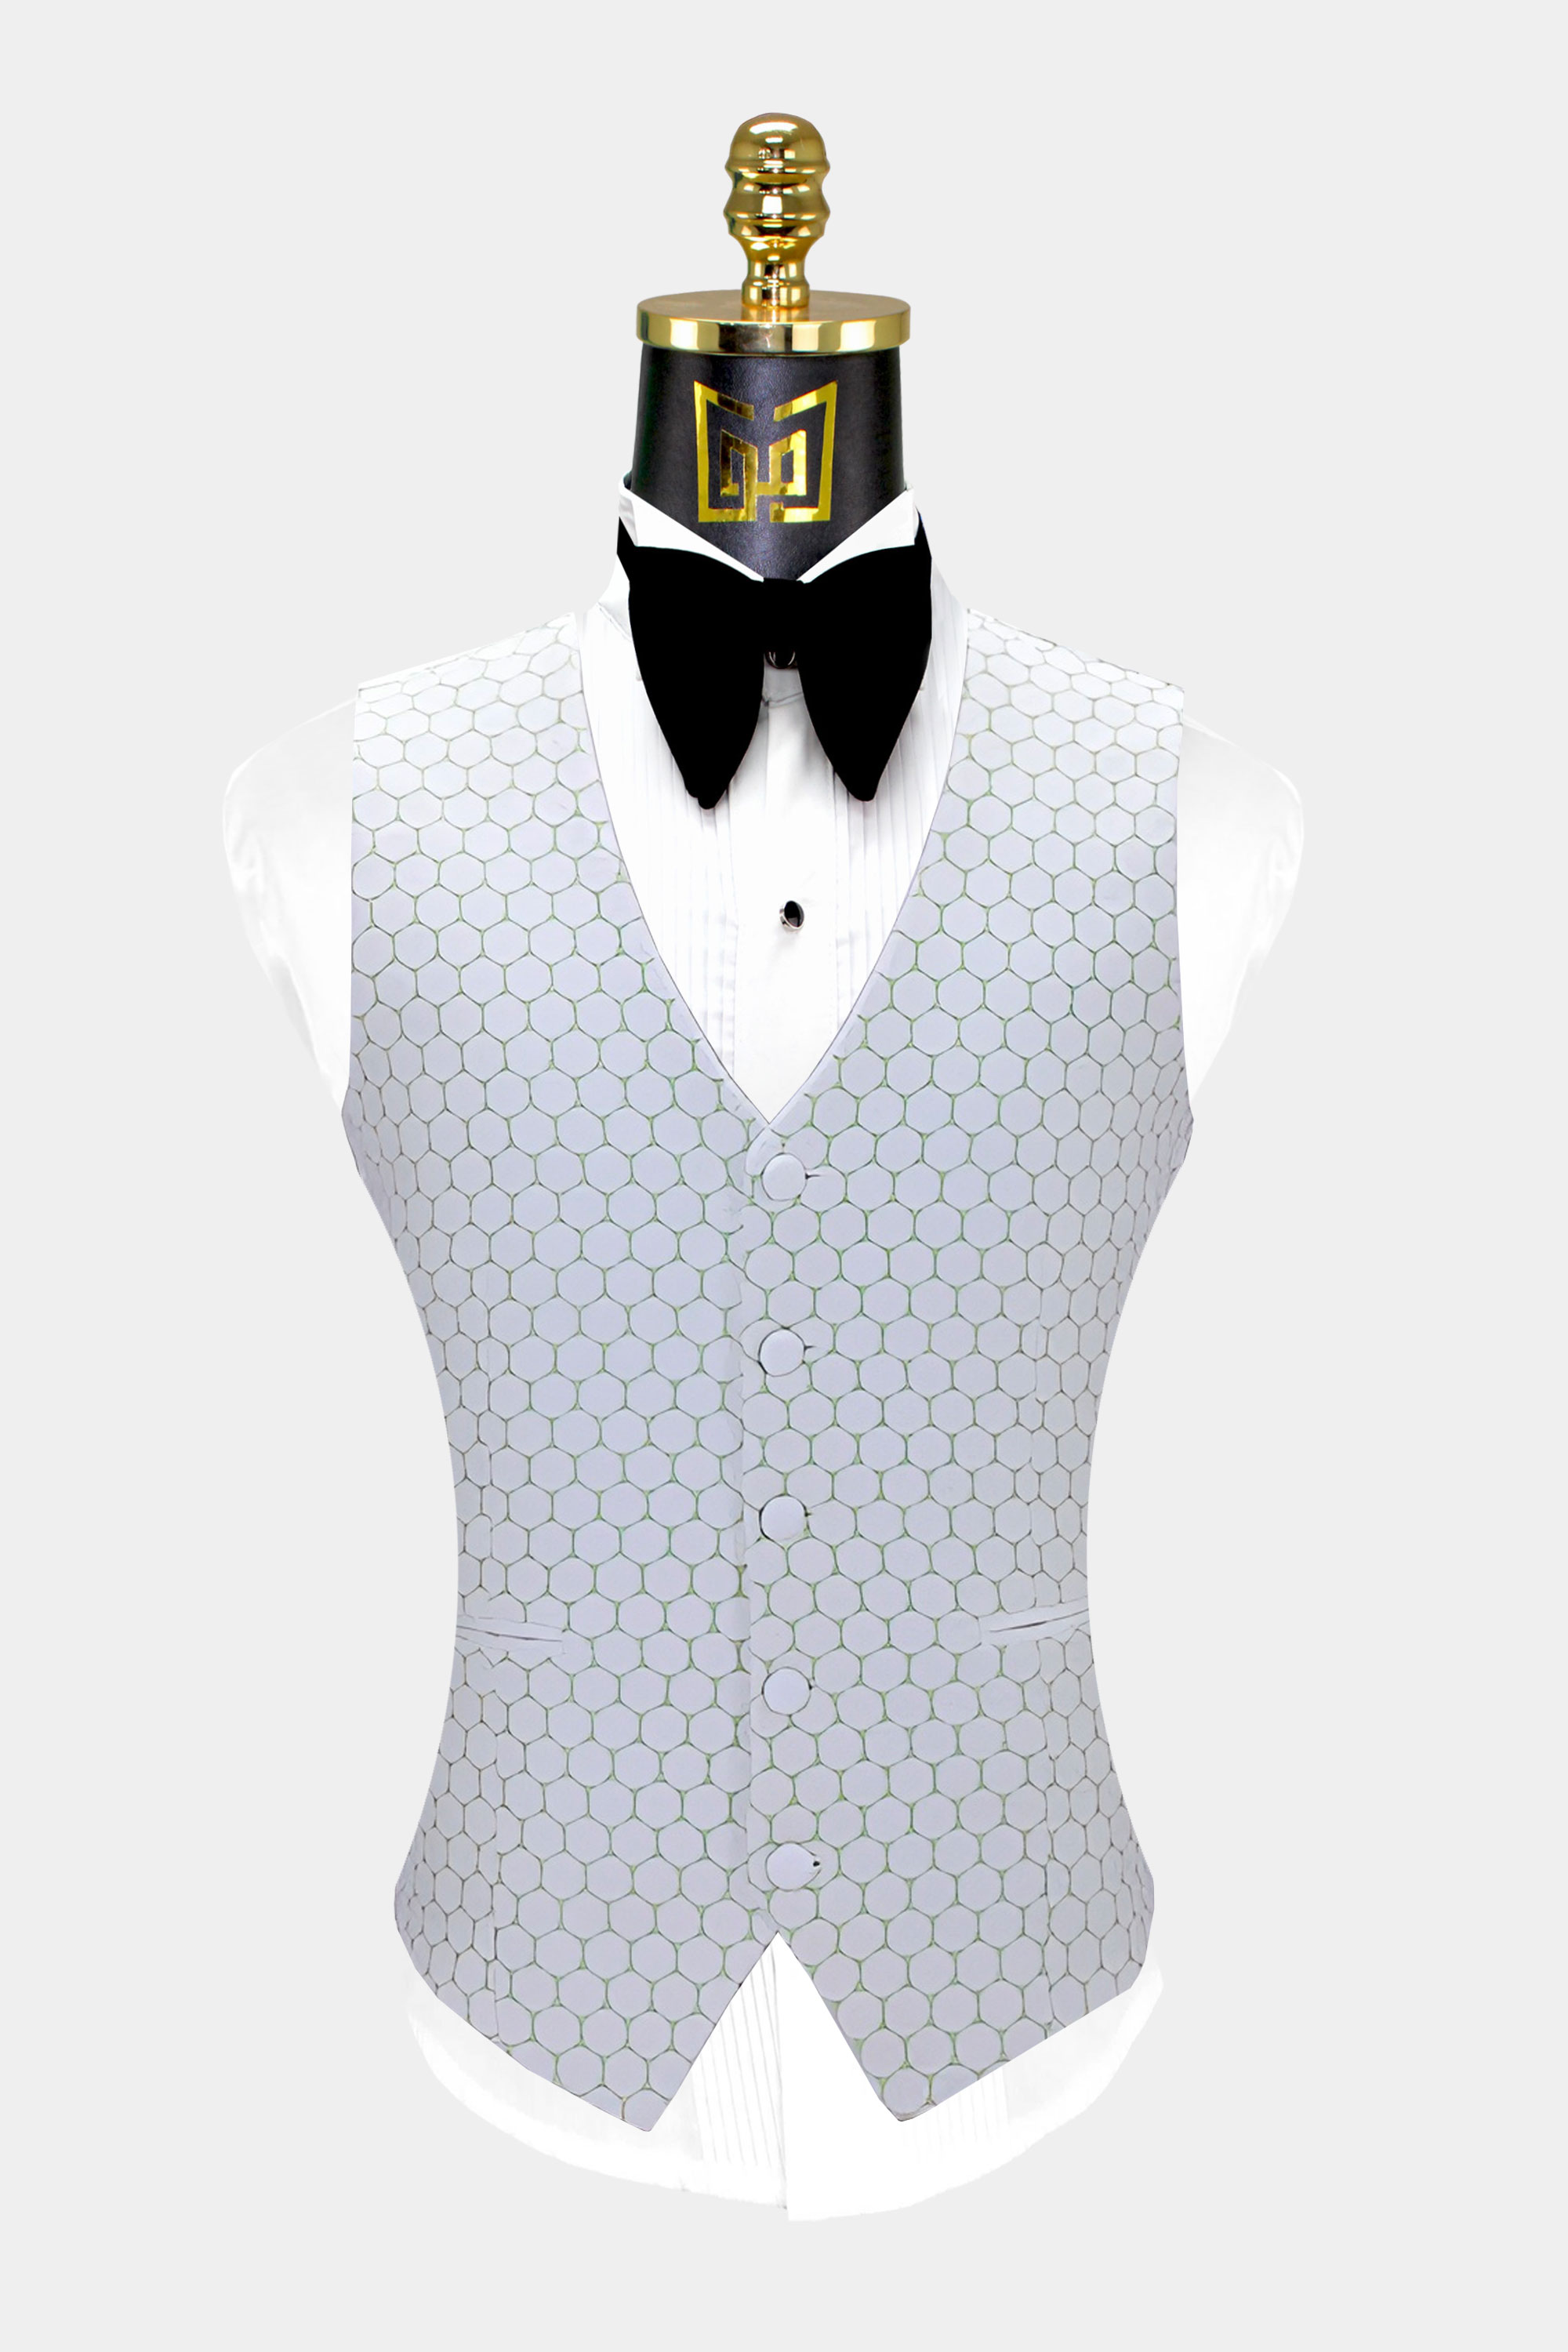 White-and-Mint-Green-Tuxedo-Vest-from-Gentlemansguru.com